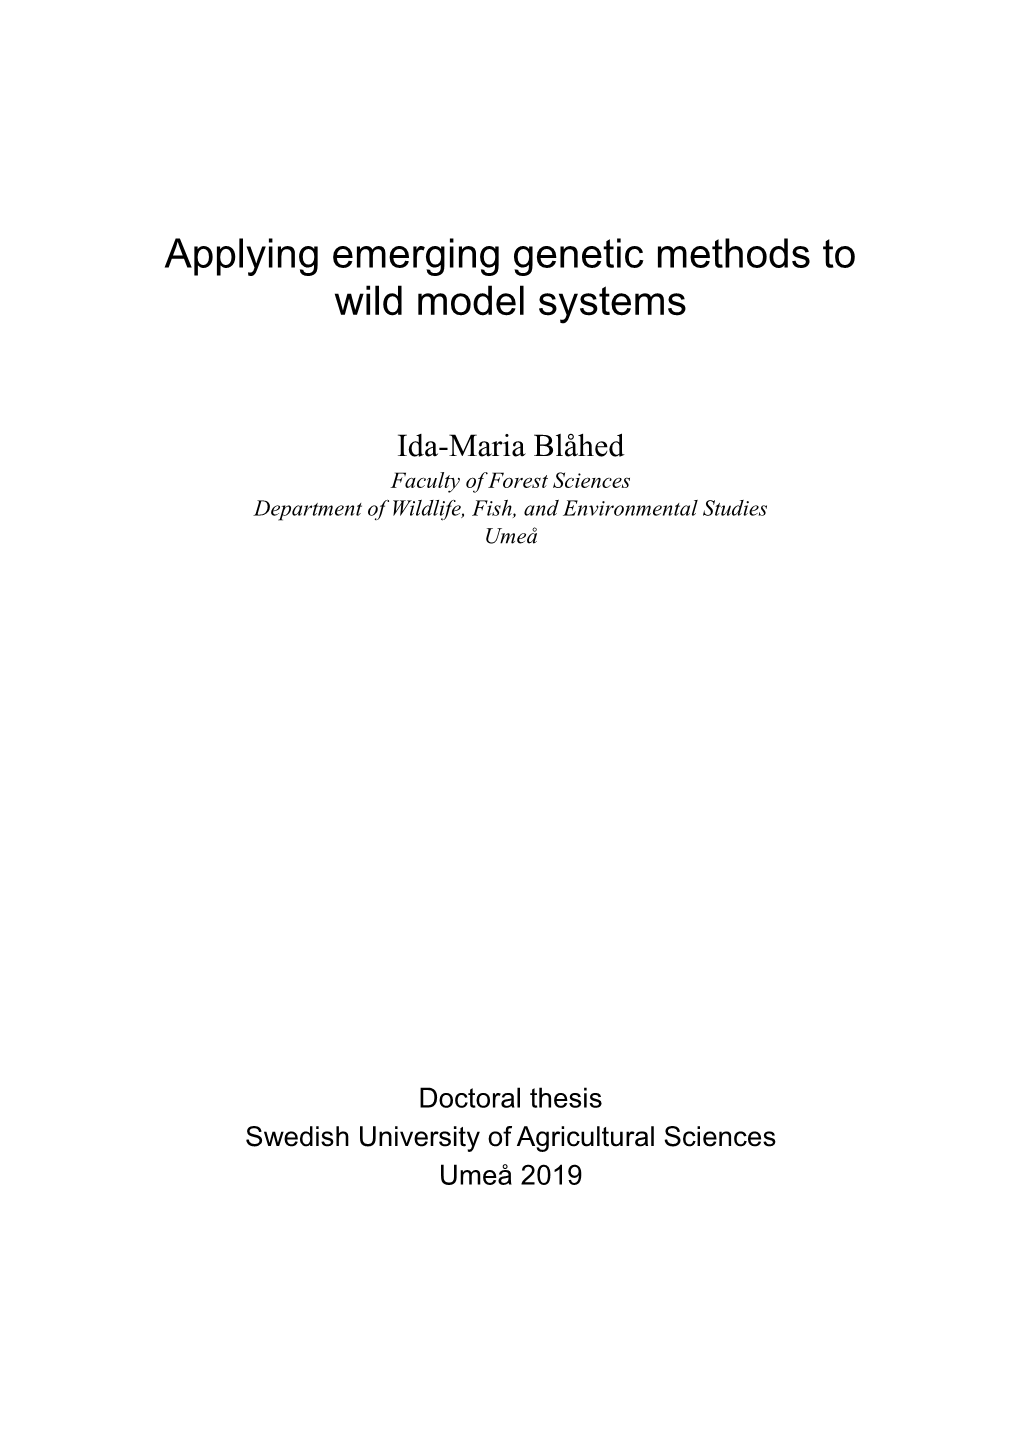 Applying Emerging Genetic Methods to Wild Model Systems